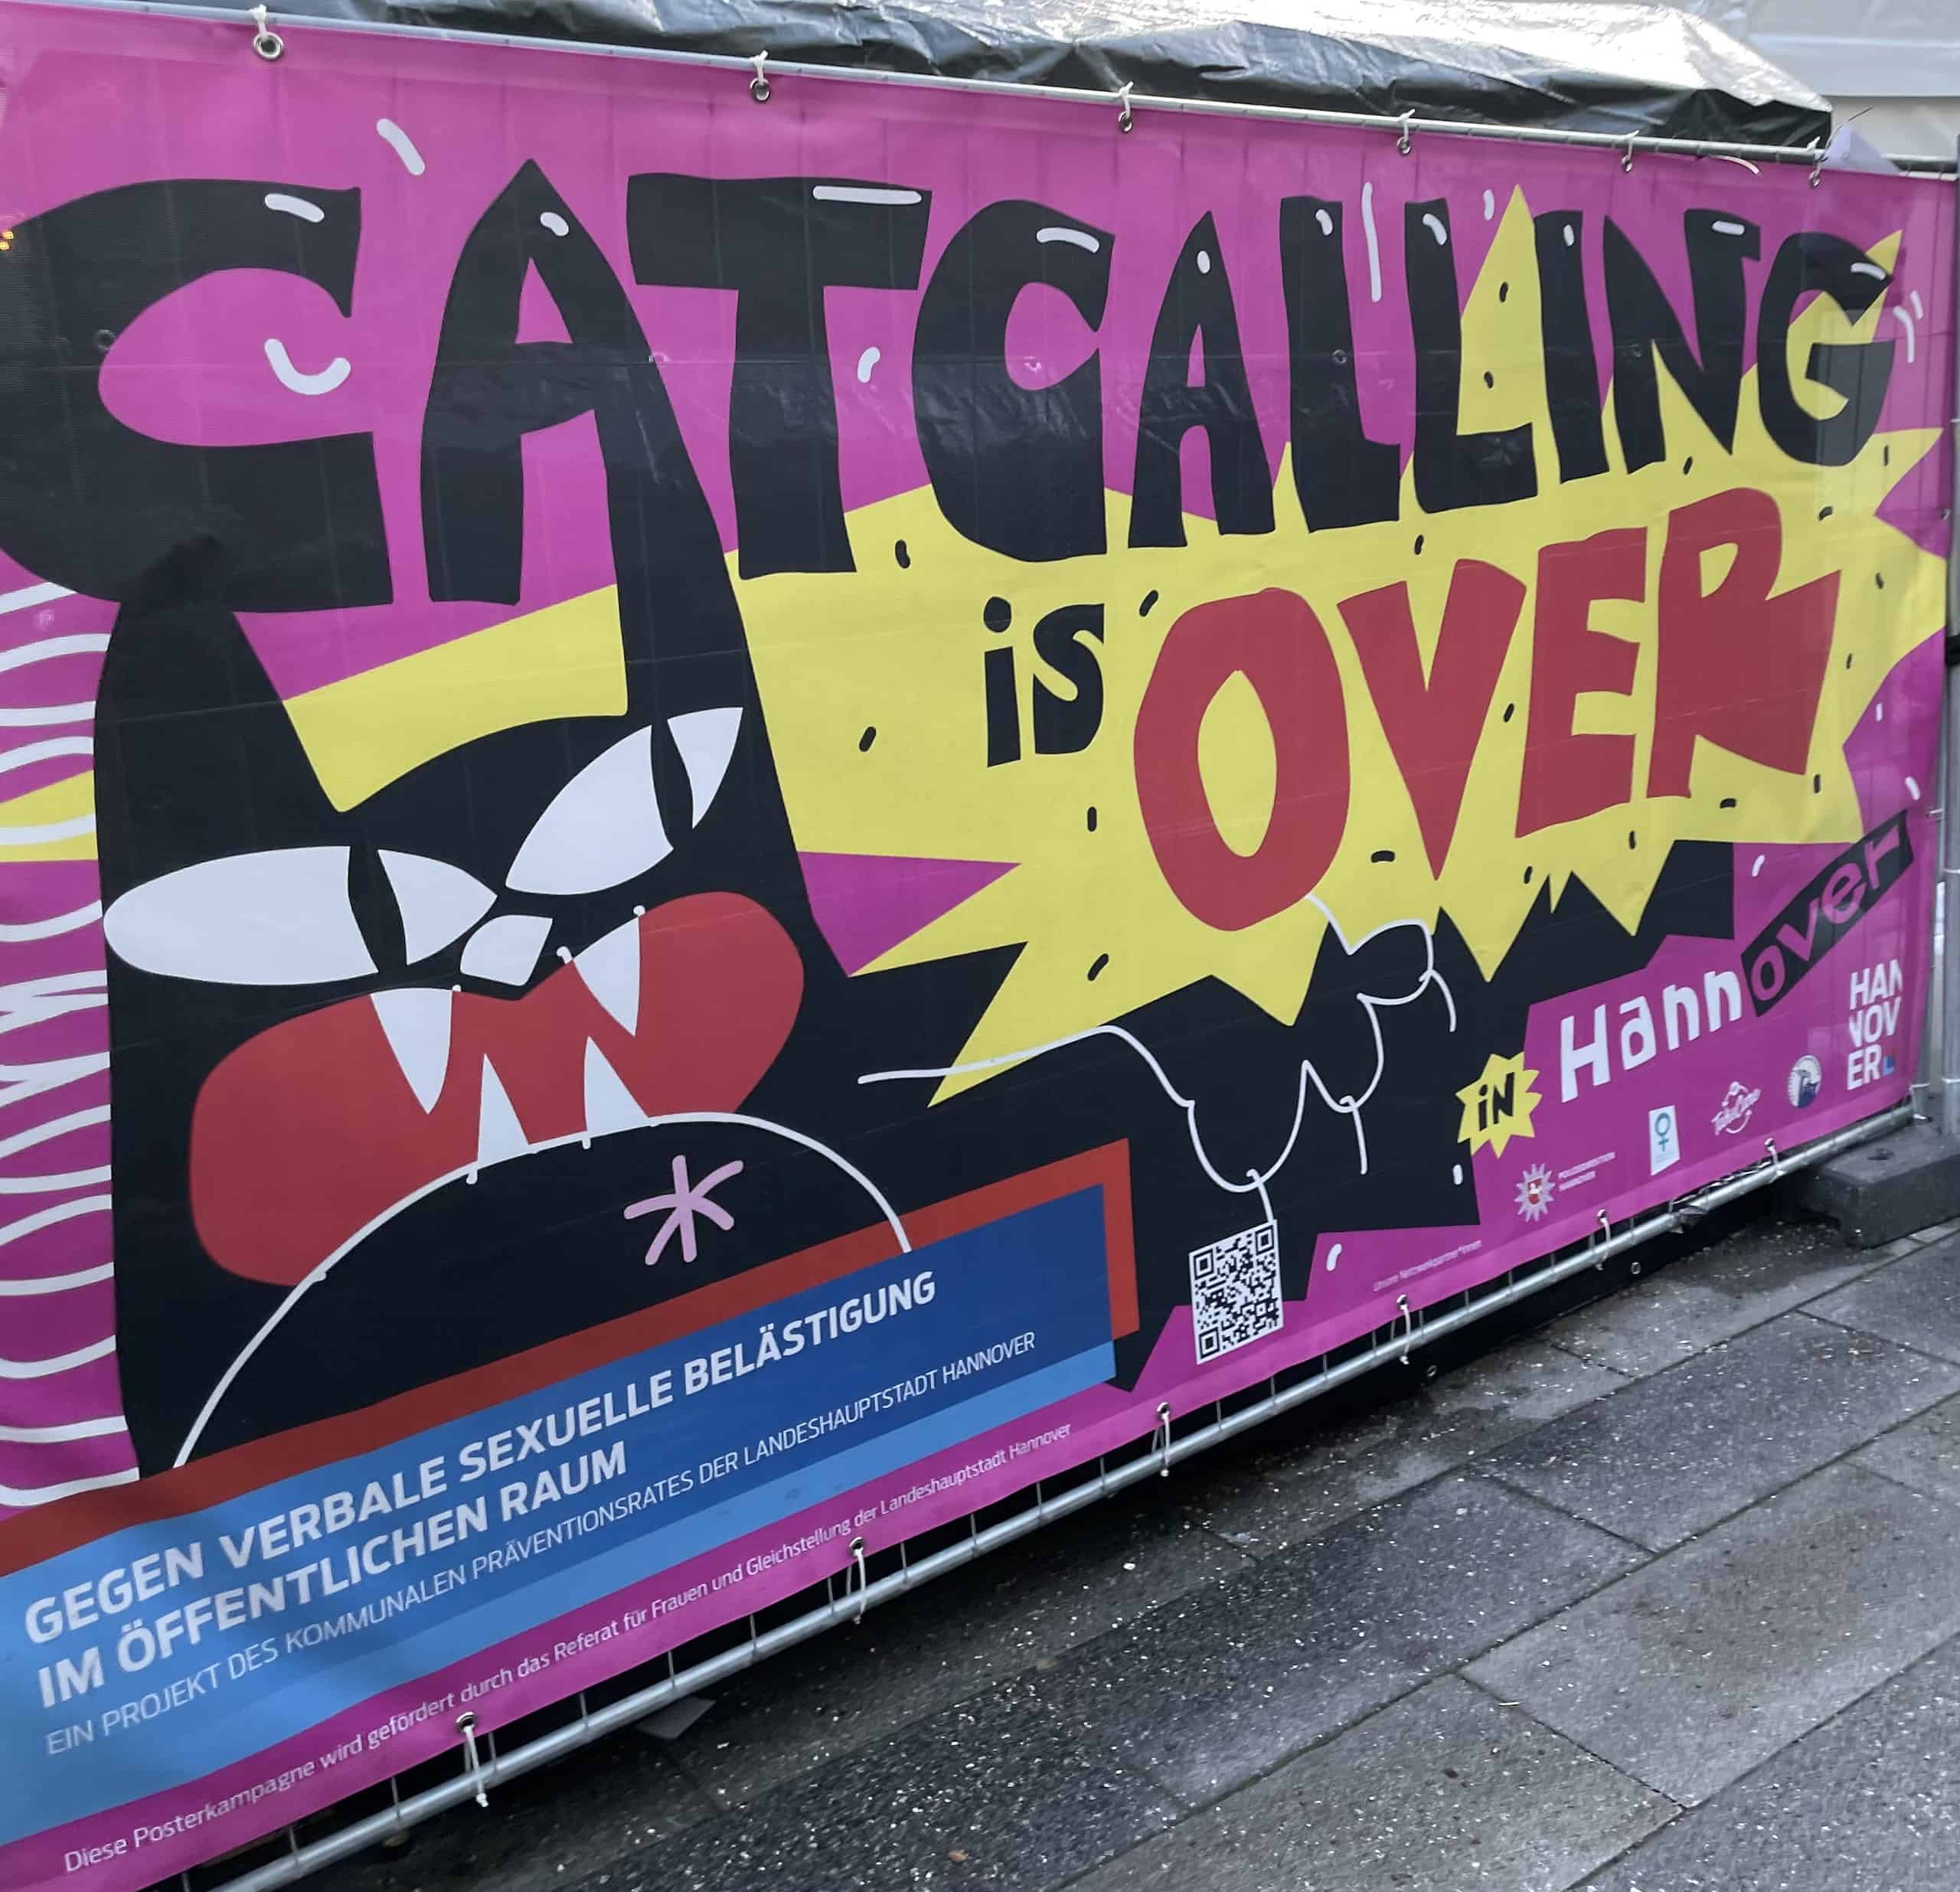 Großes Plakat 'Catcaling is over' in der Pasarelle